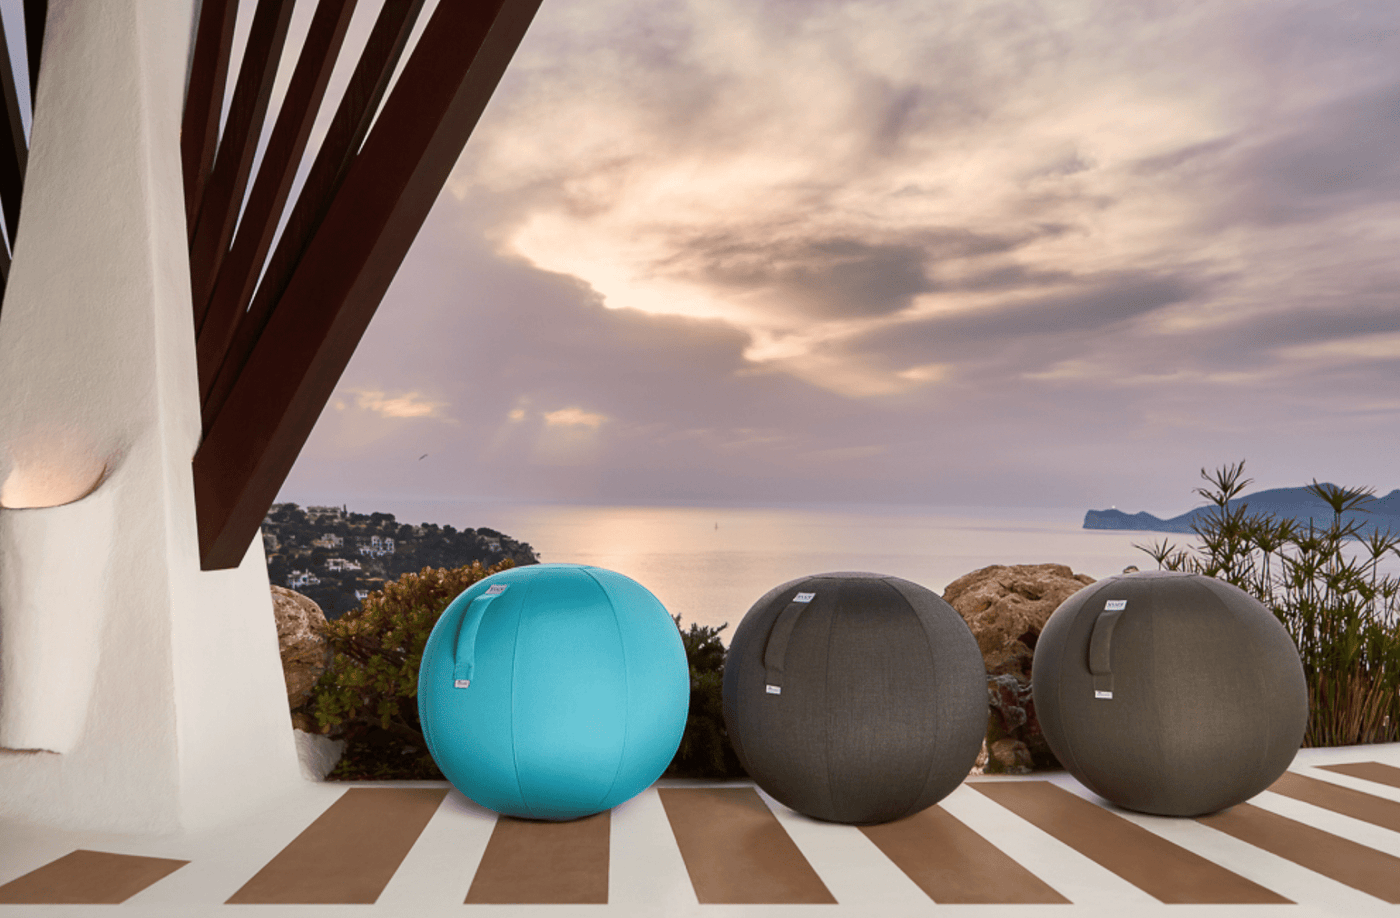 Vluv Aqva Outdoor Sitting Ball-Furnishings-BALLS, SPORT EQUIPMENT, SUSTAINABLE DECOR-Forest Homes-Nature inspired decor-Nature decor